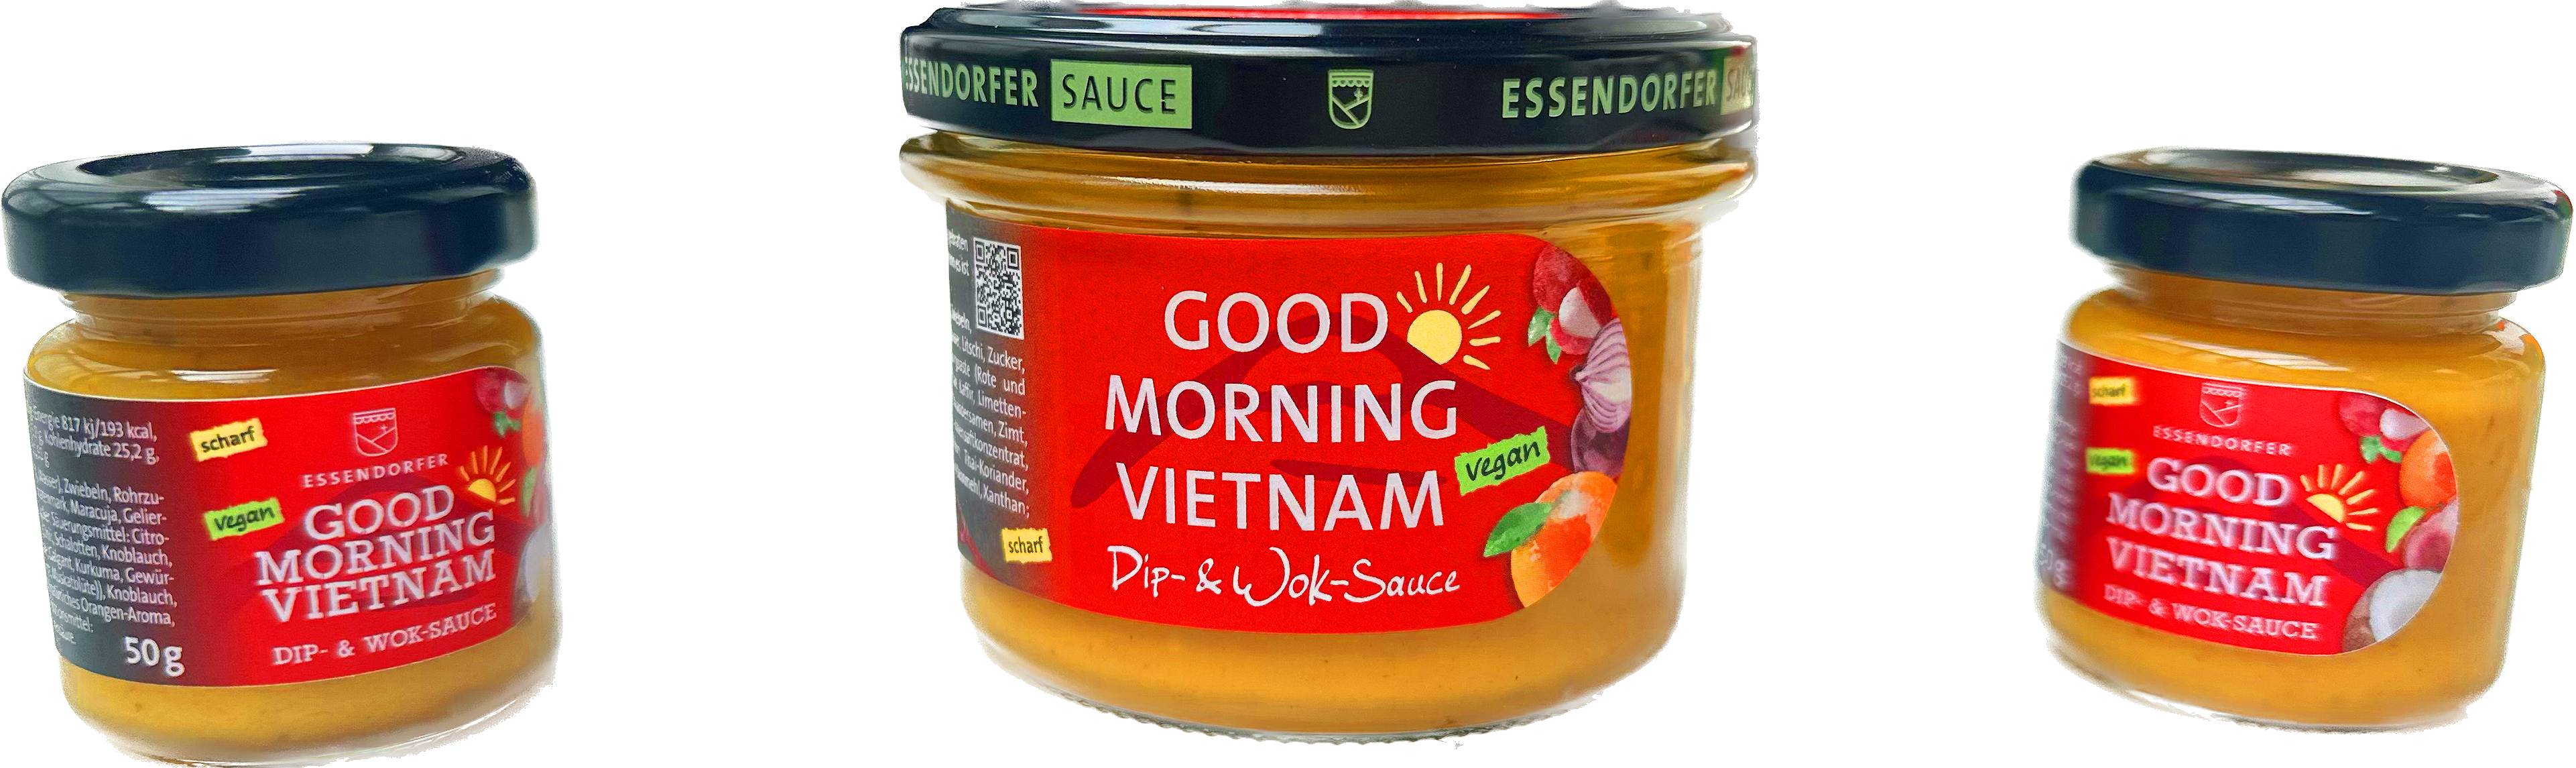 Good morning Vietnam Dip und Wok Sauce